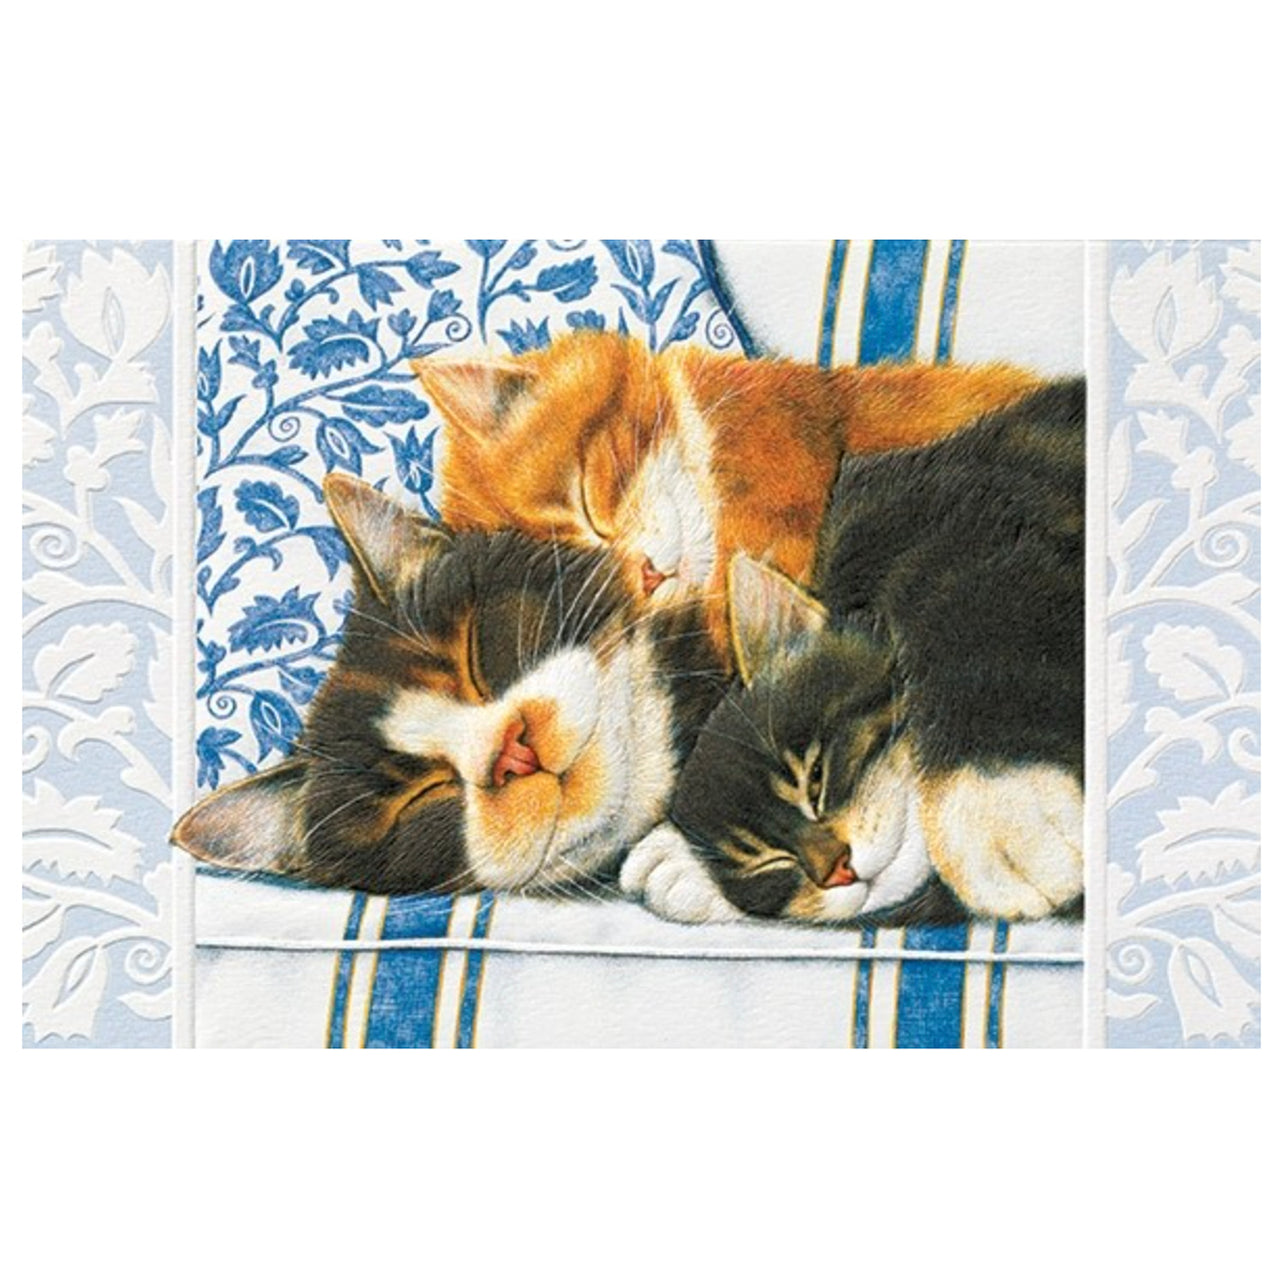 Sleepy Kittens Birthday Card